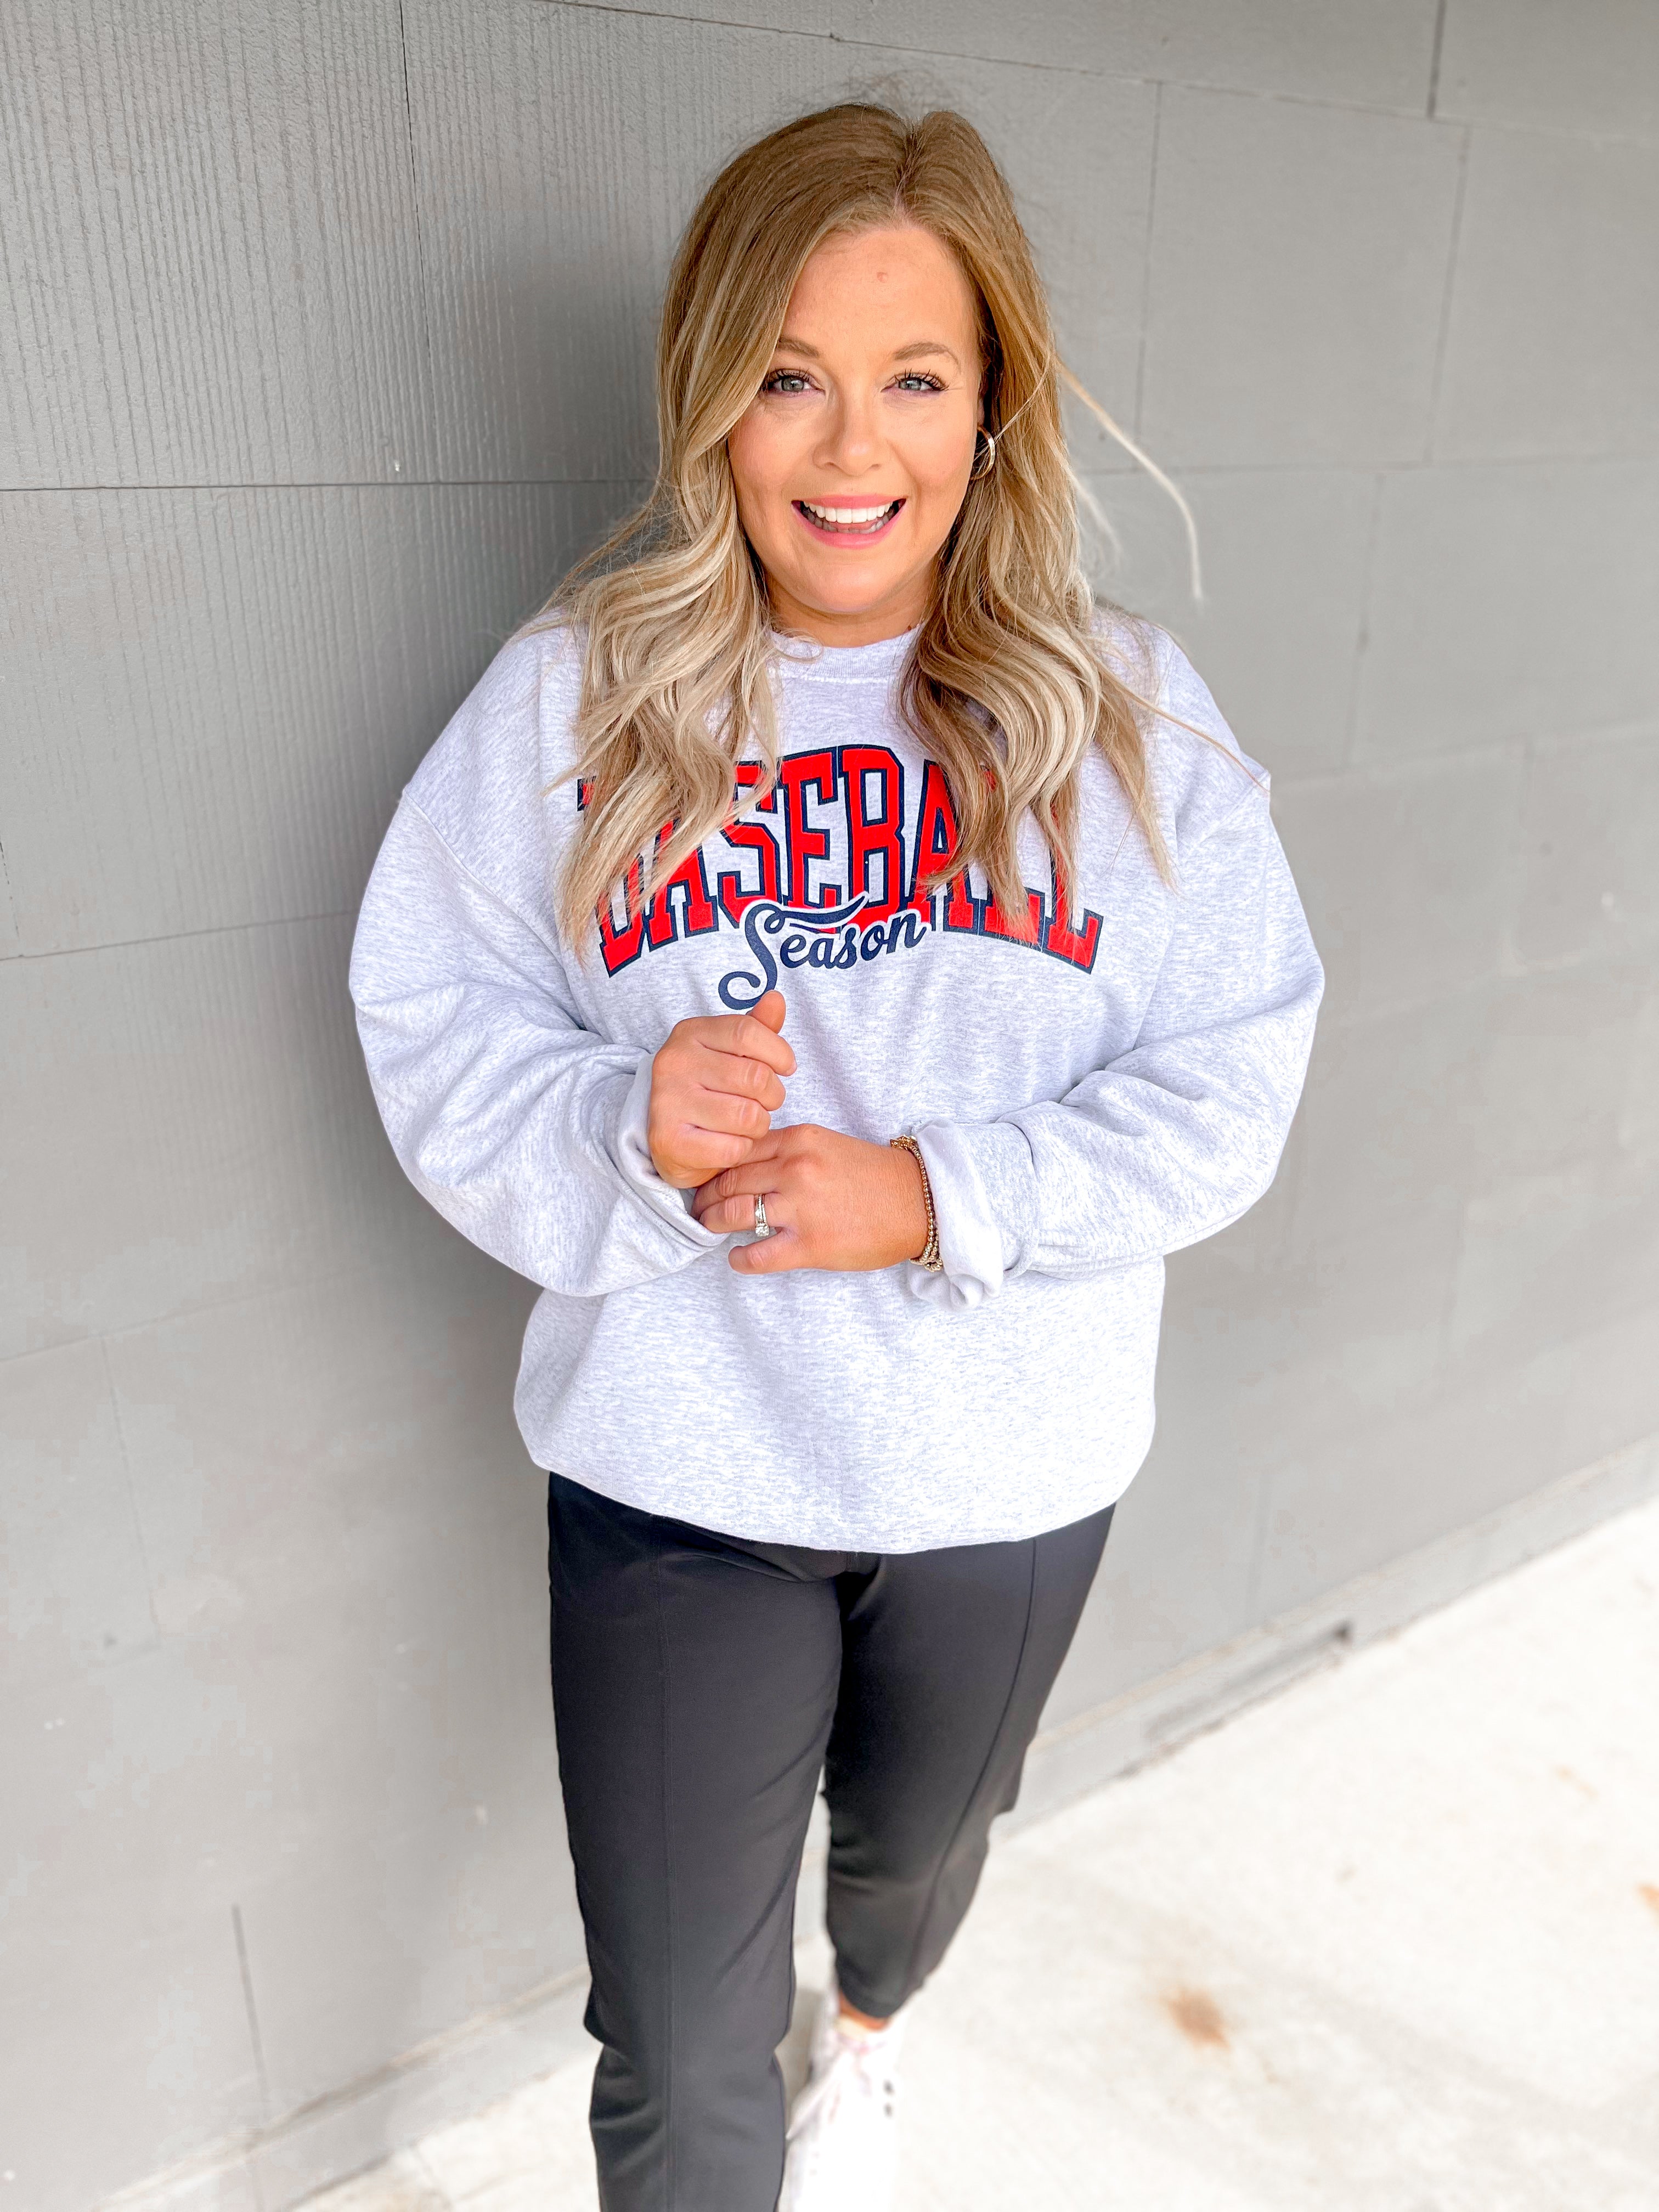 Charlie Southern Baseball Season Sweatshirt